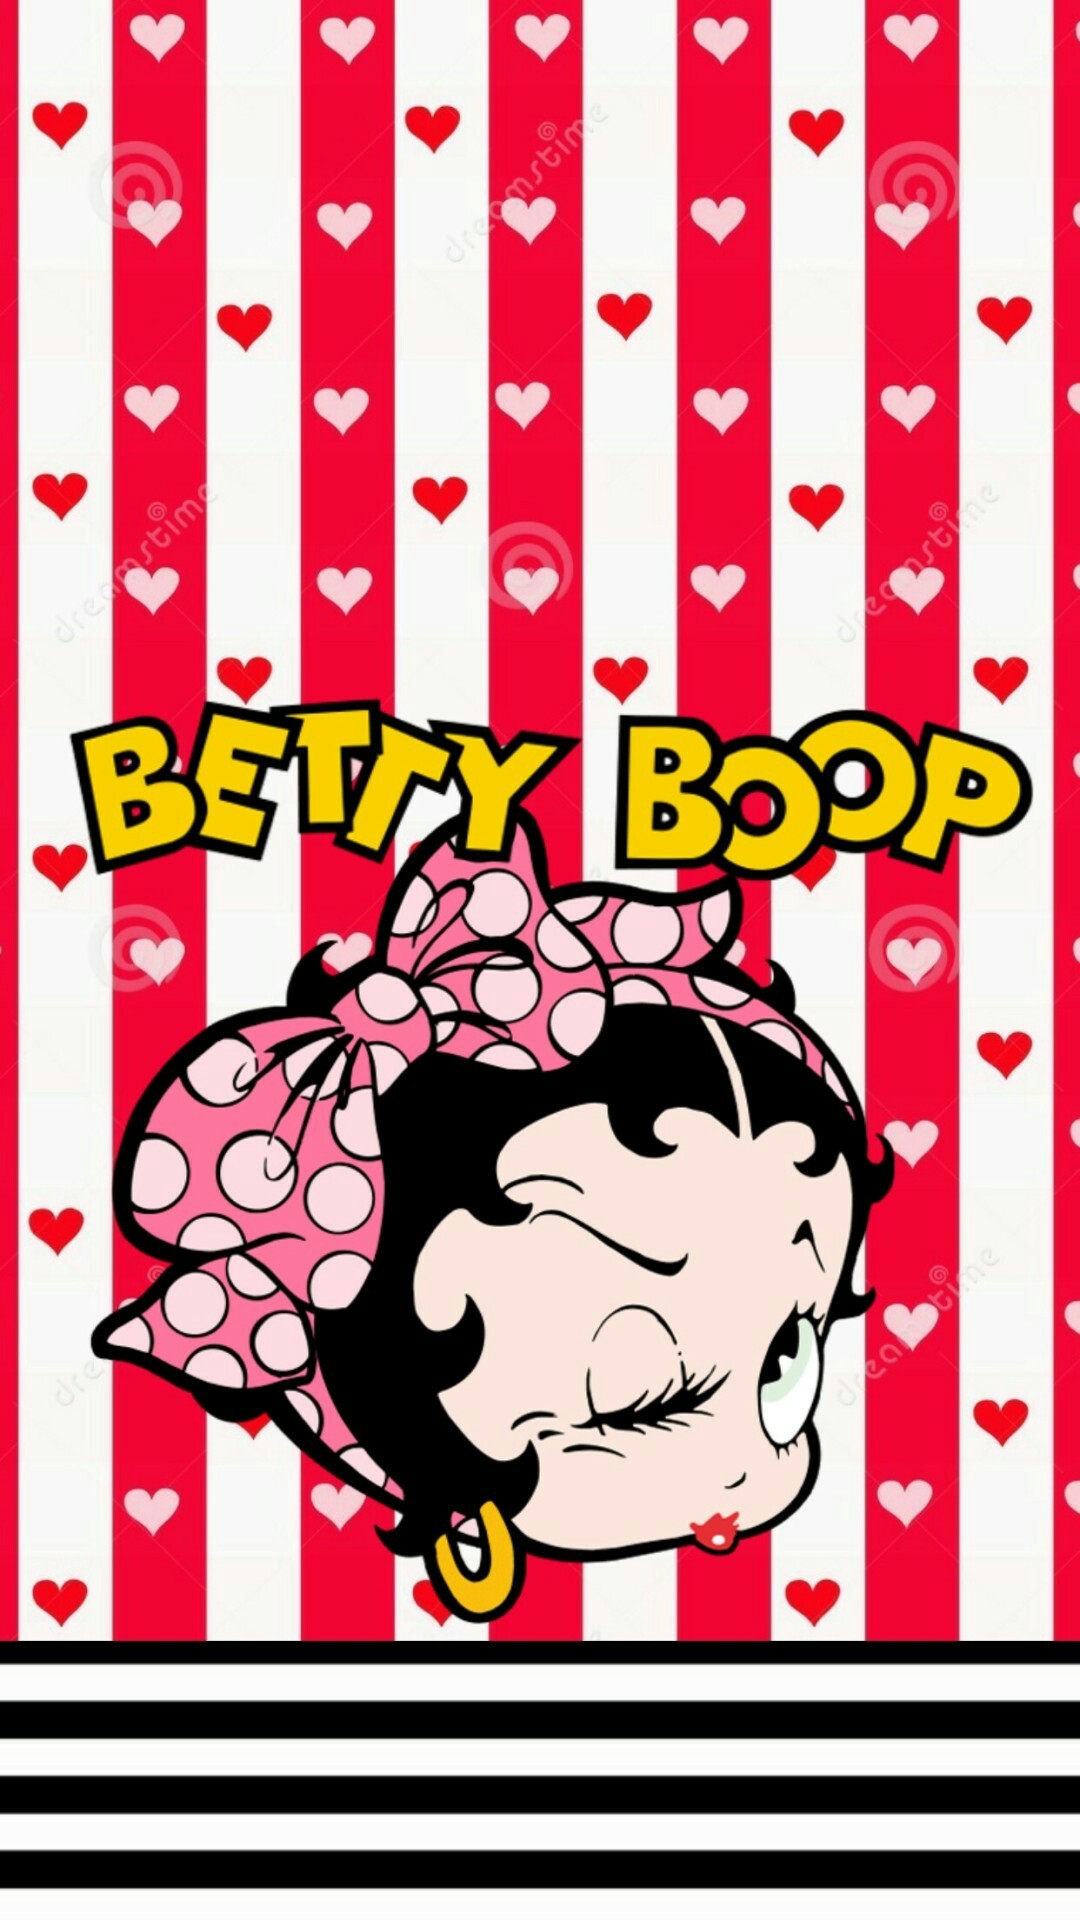 Wallpaper Betty Boop Image